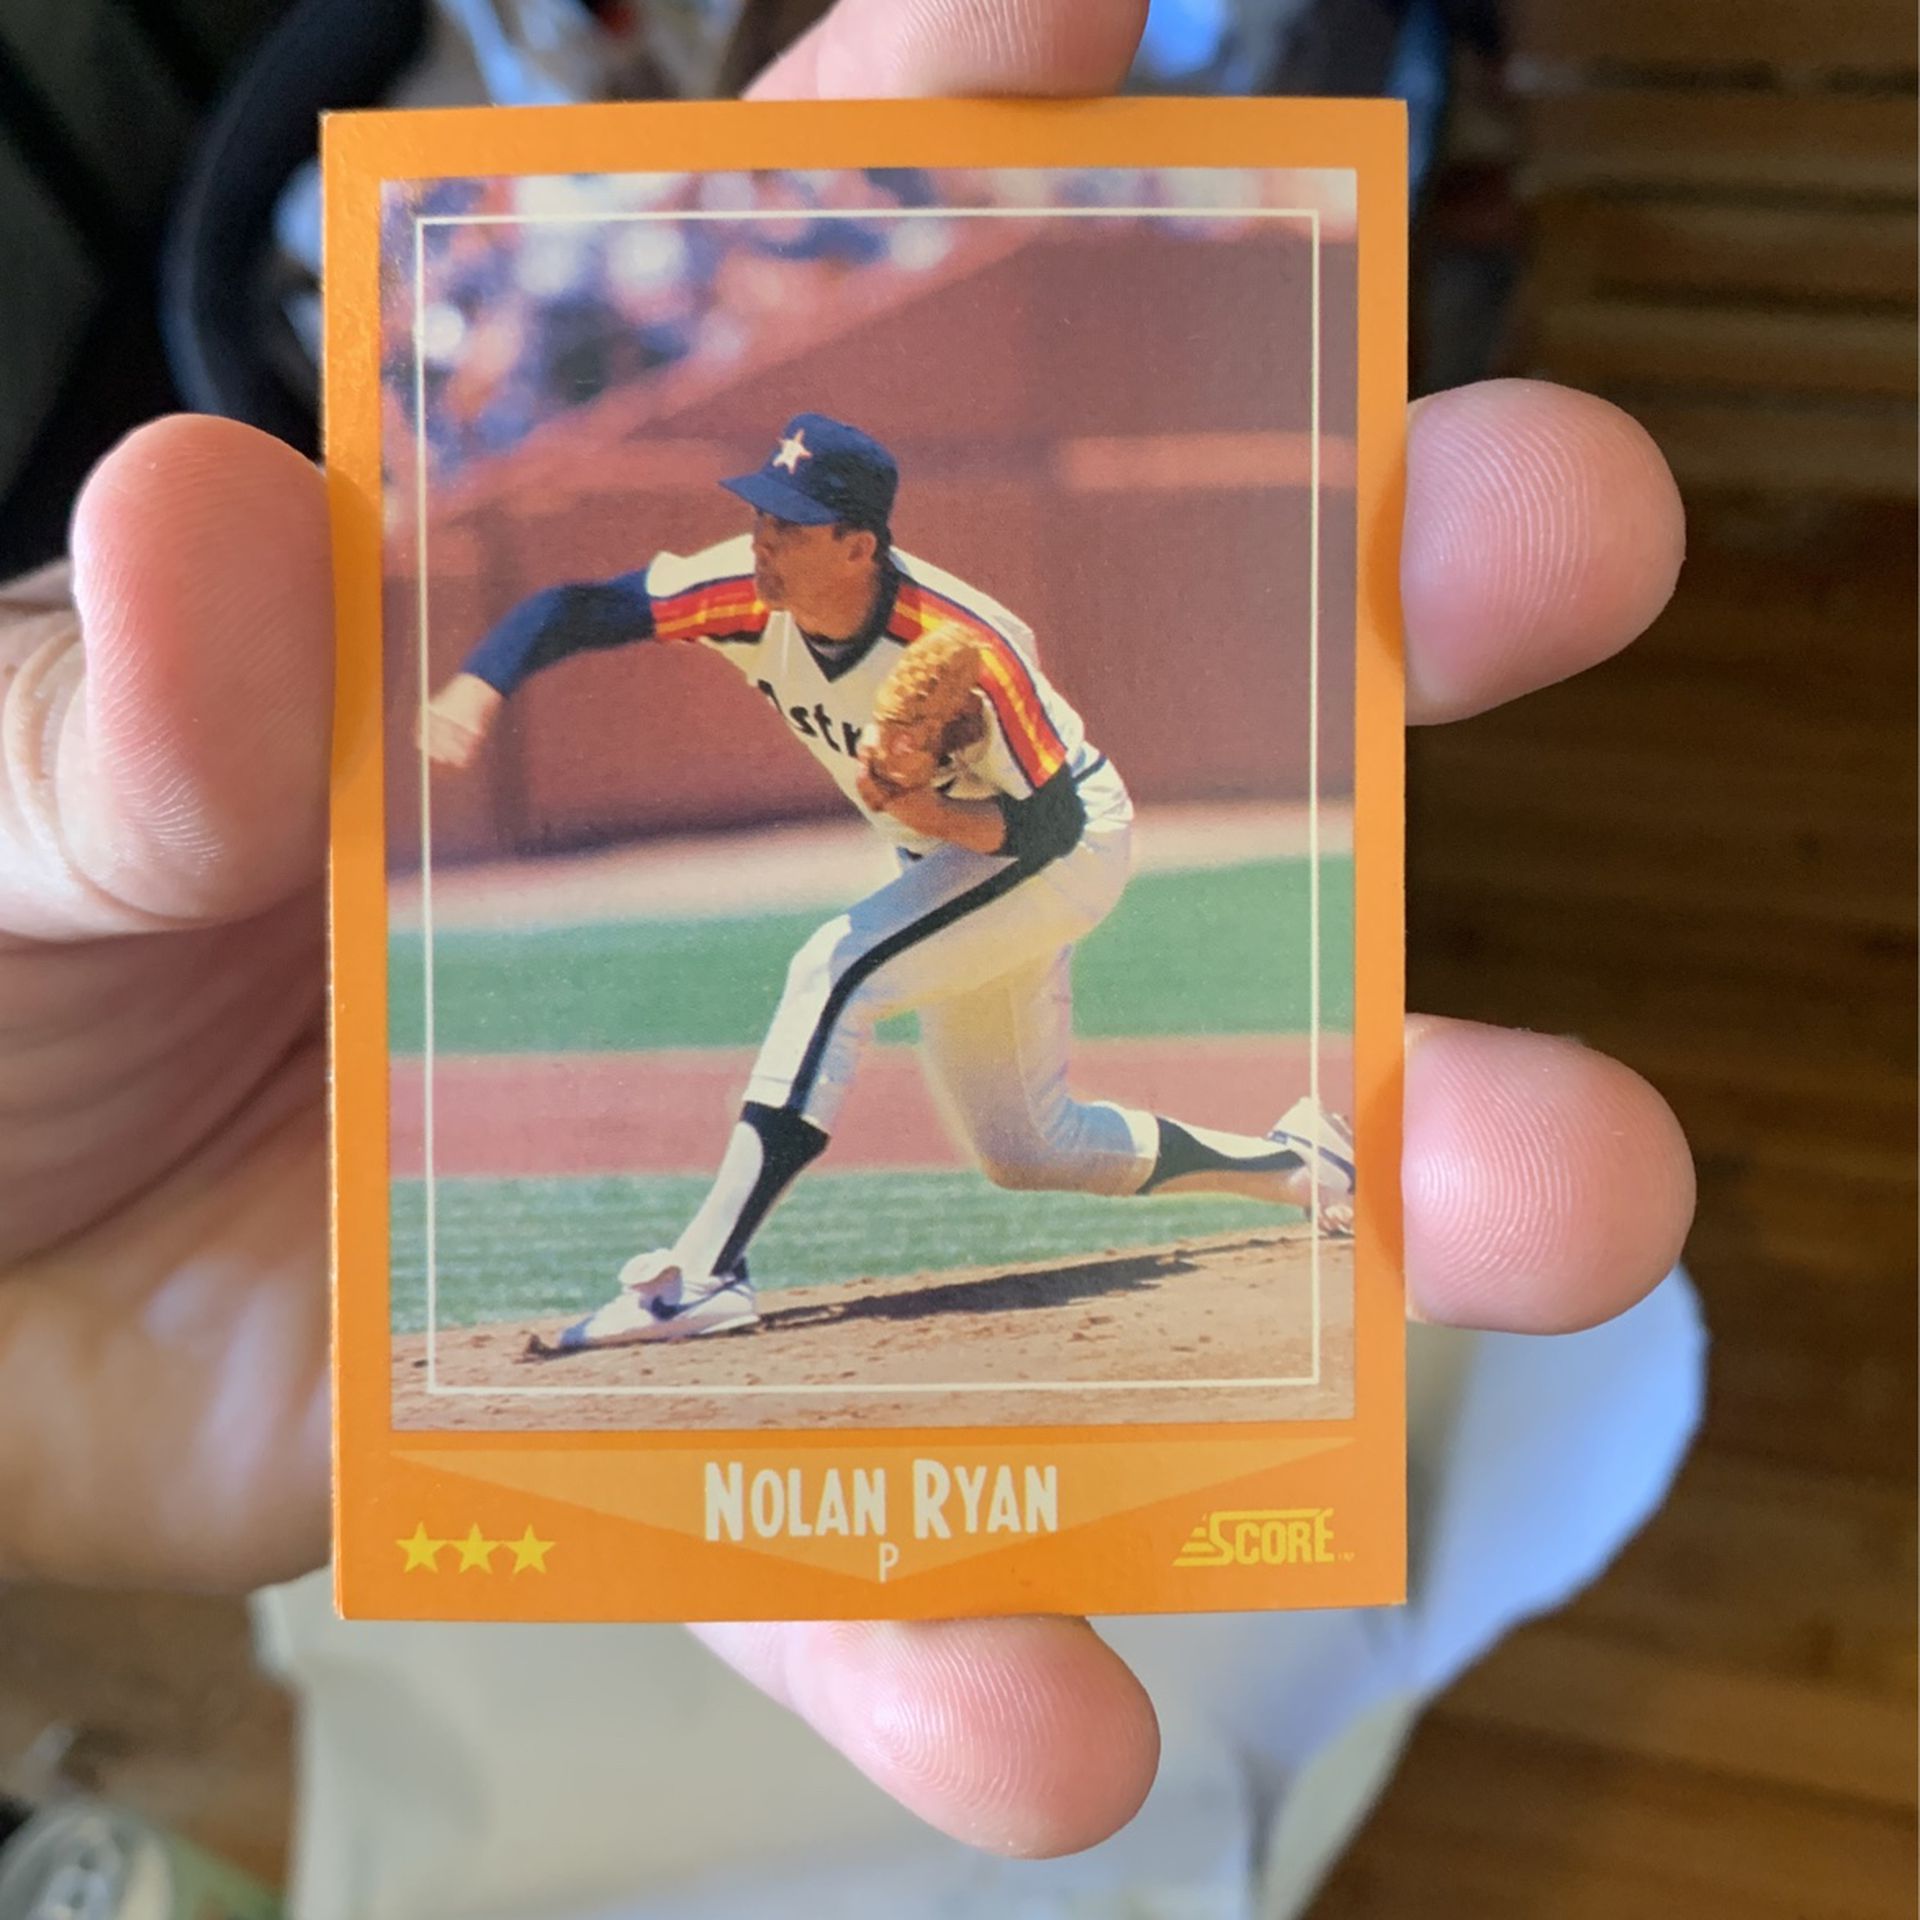 Nolan Ryan Score Baseball Card